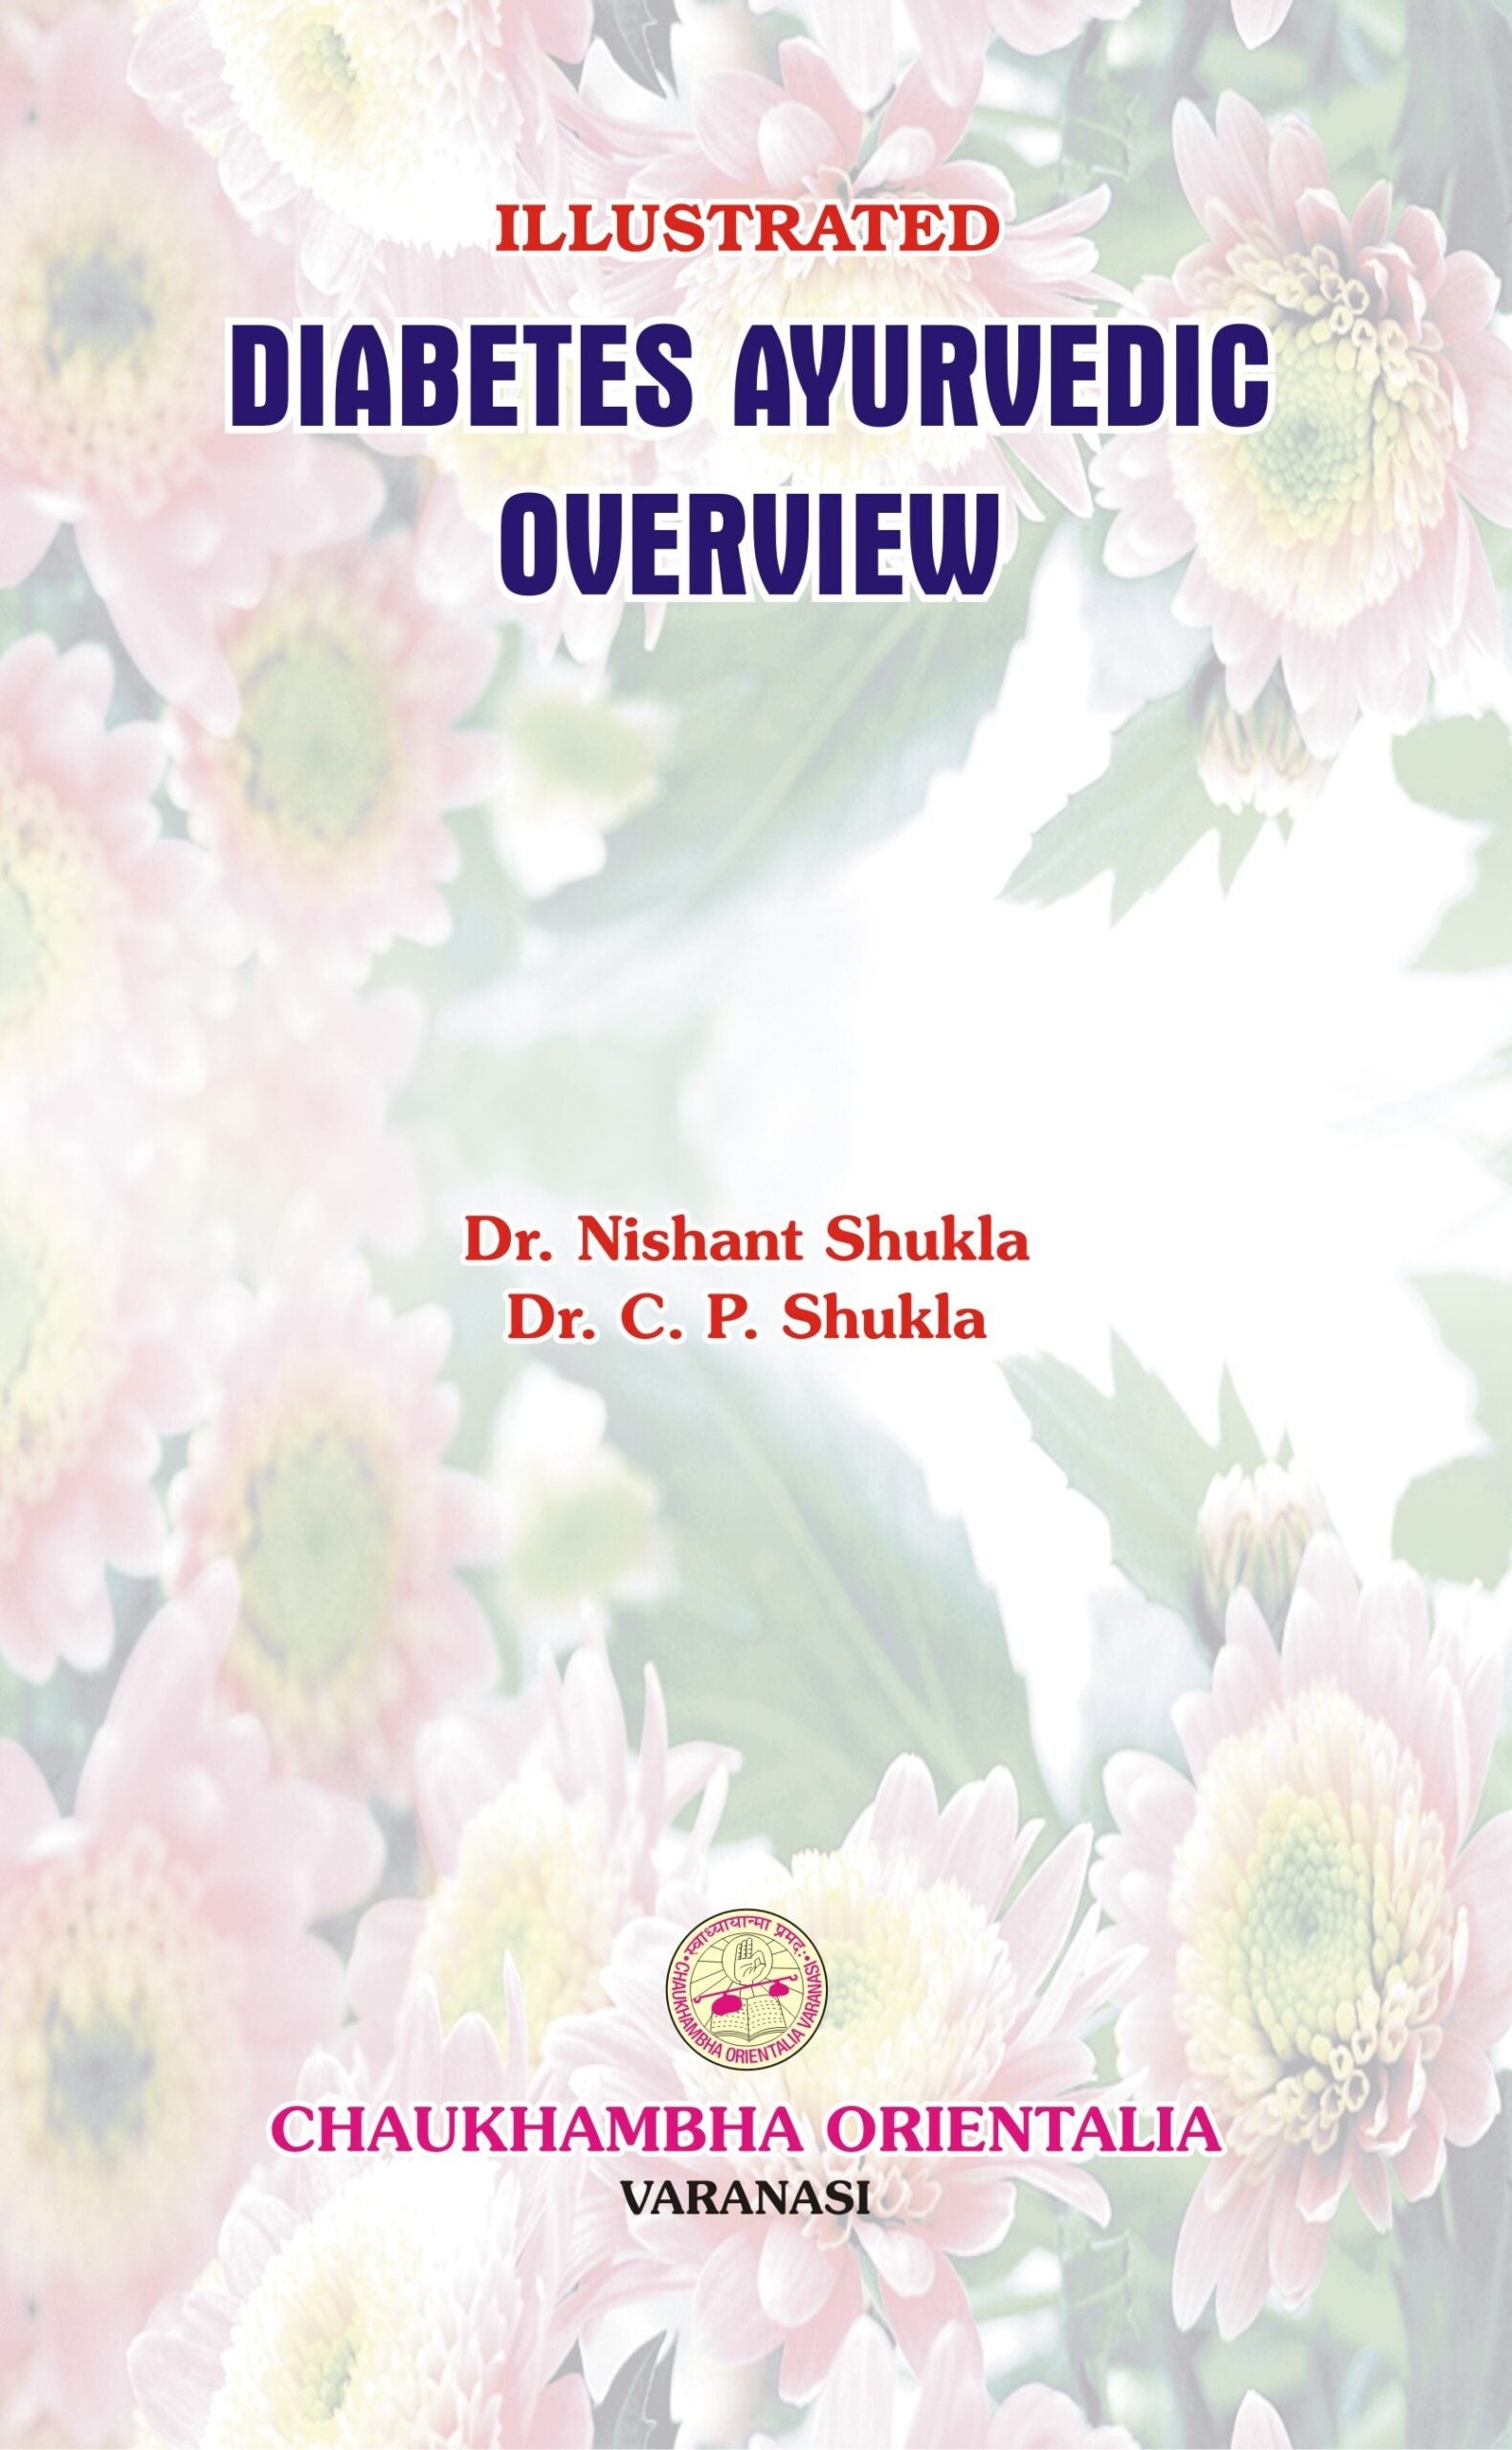 Chaukhambha Orientalia Diabetes Ayurvedic Overview